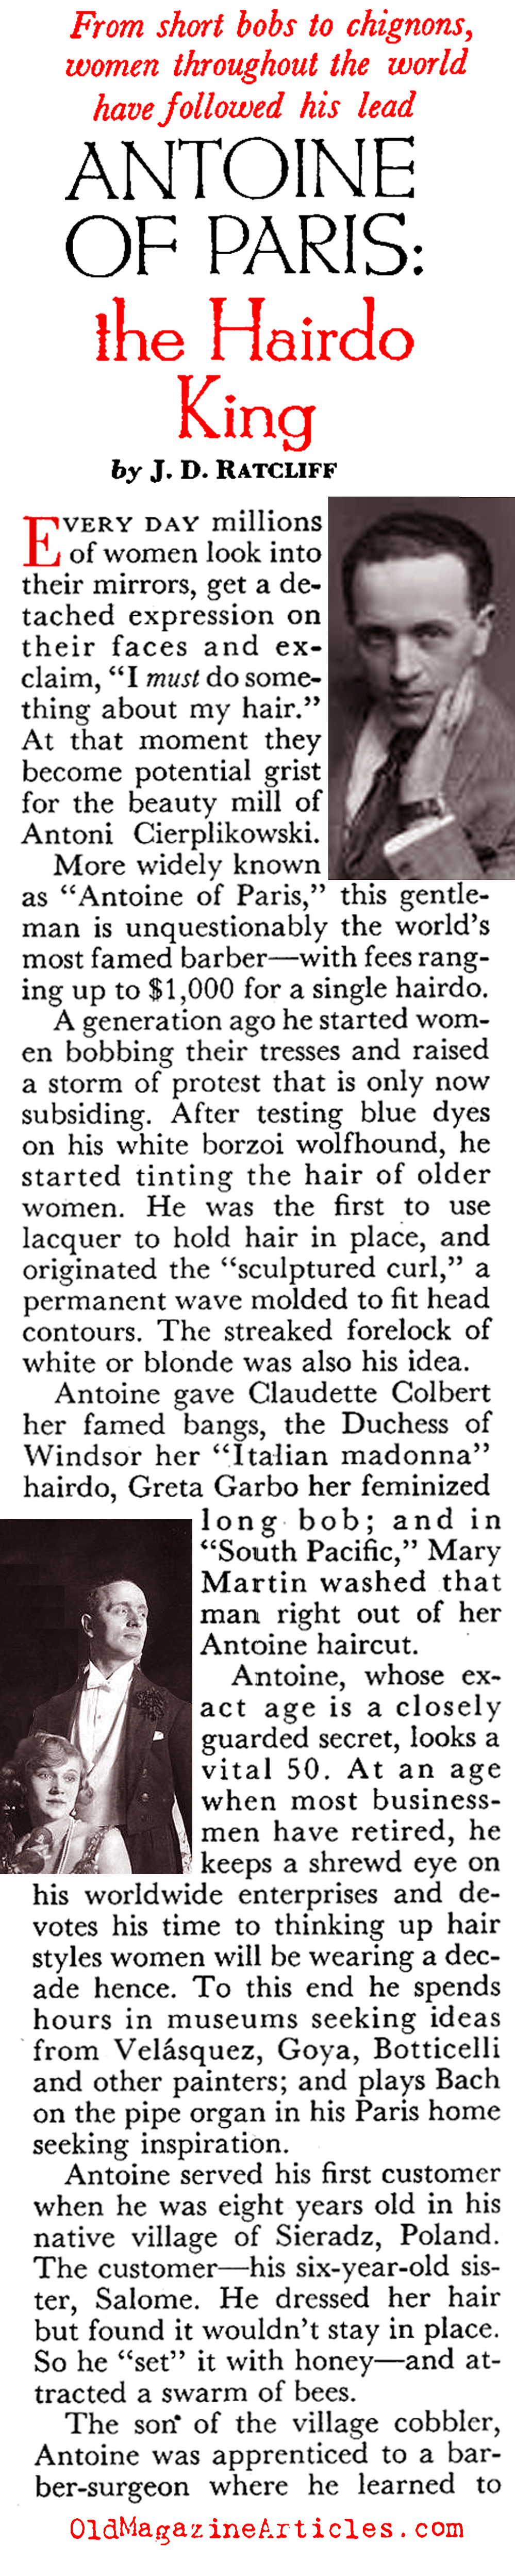 The First Celebrity Hairdresser (Coronet Magazine, 1955)